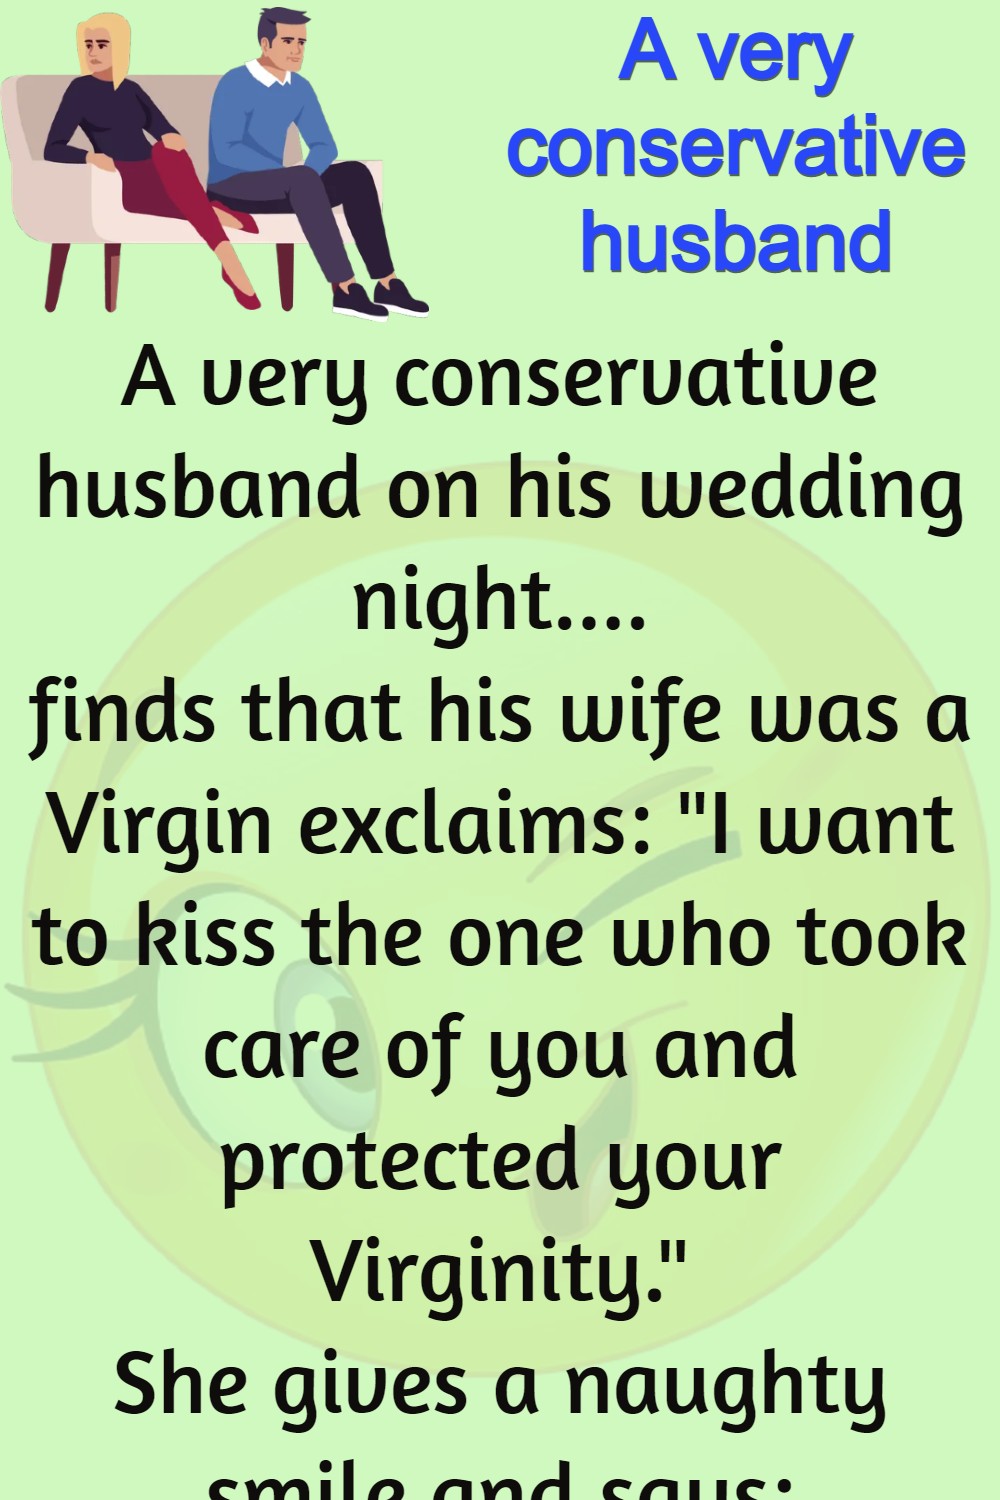 A very conservative husband